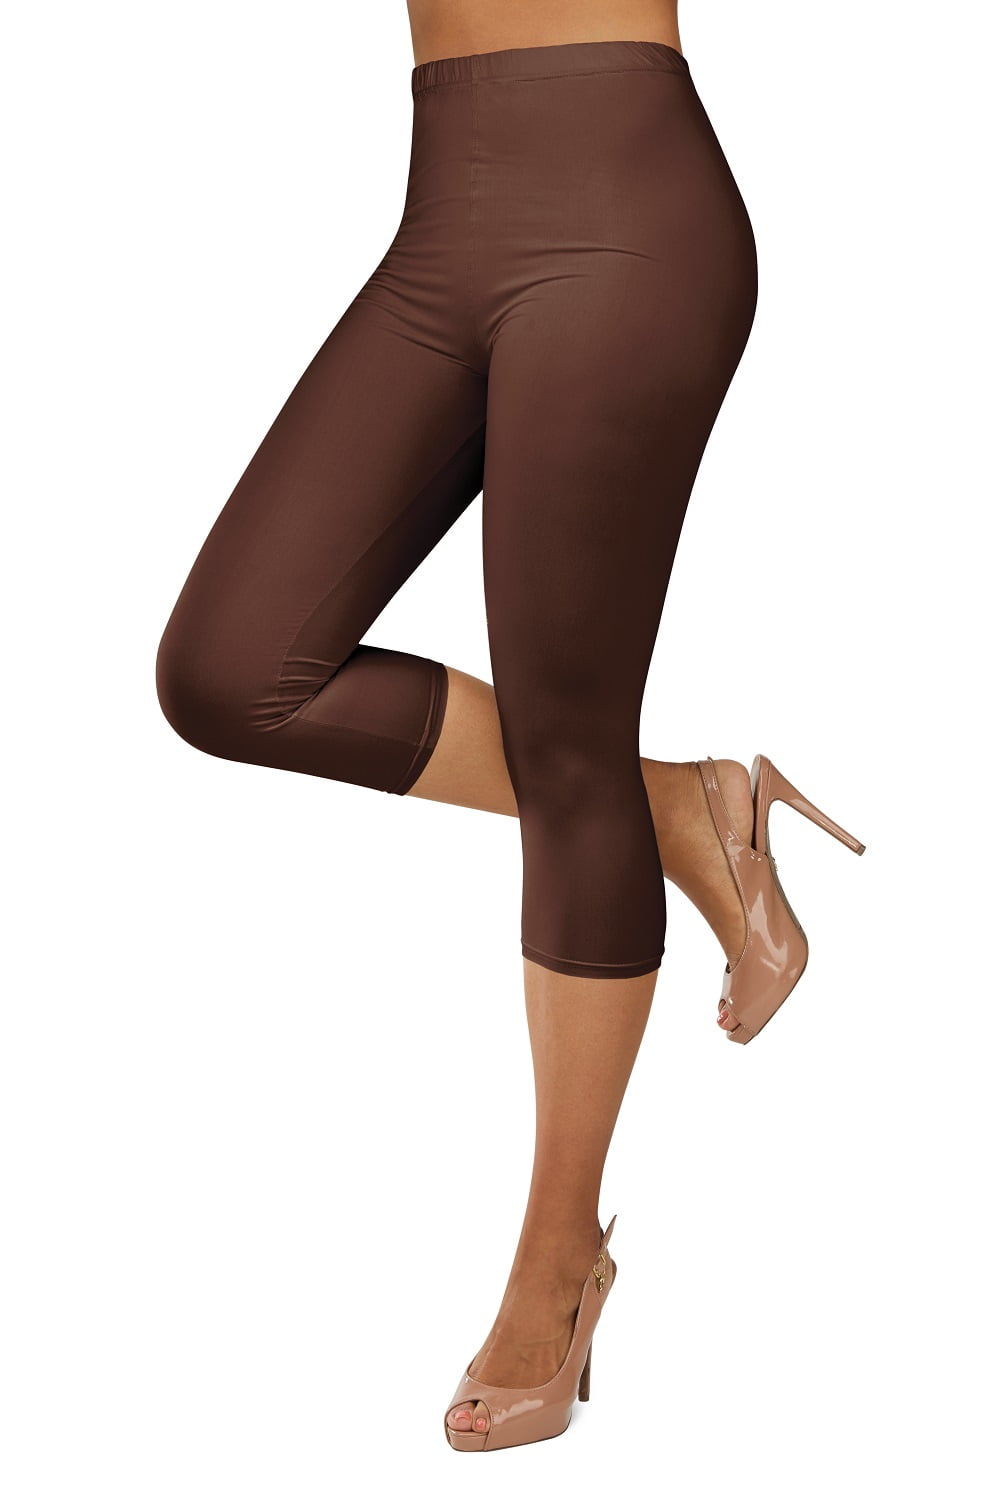 Gilbin Ultra Soft Capri High Waist Leggings for Women-Many Colors -One Size  & Plus Size (Black S-L) 